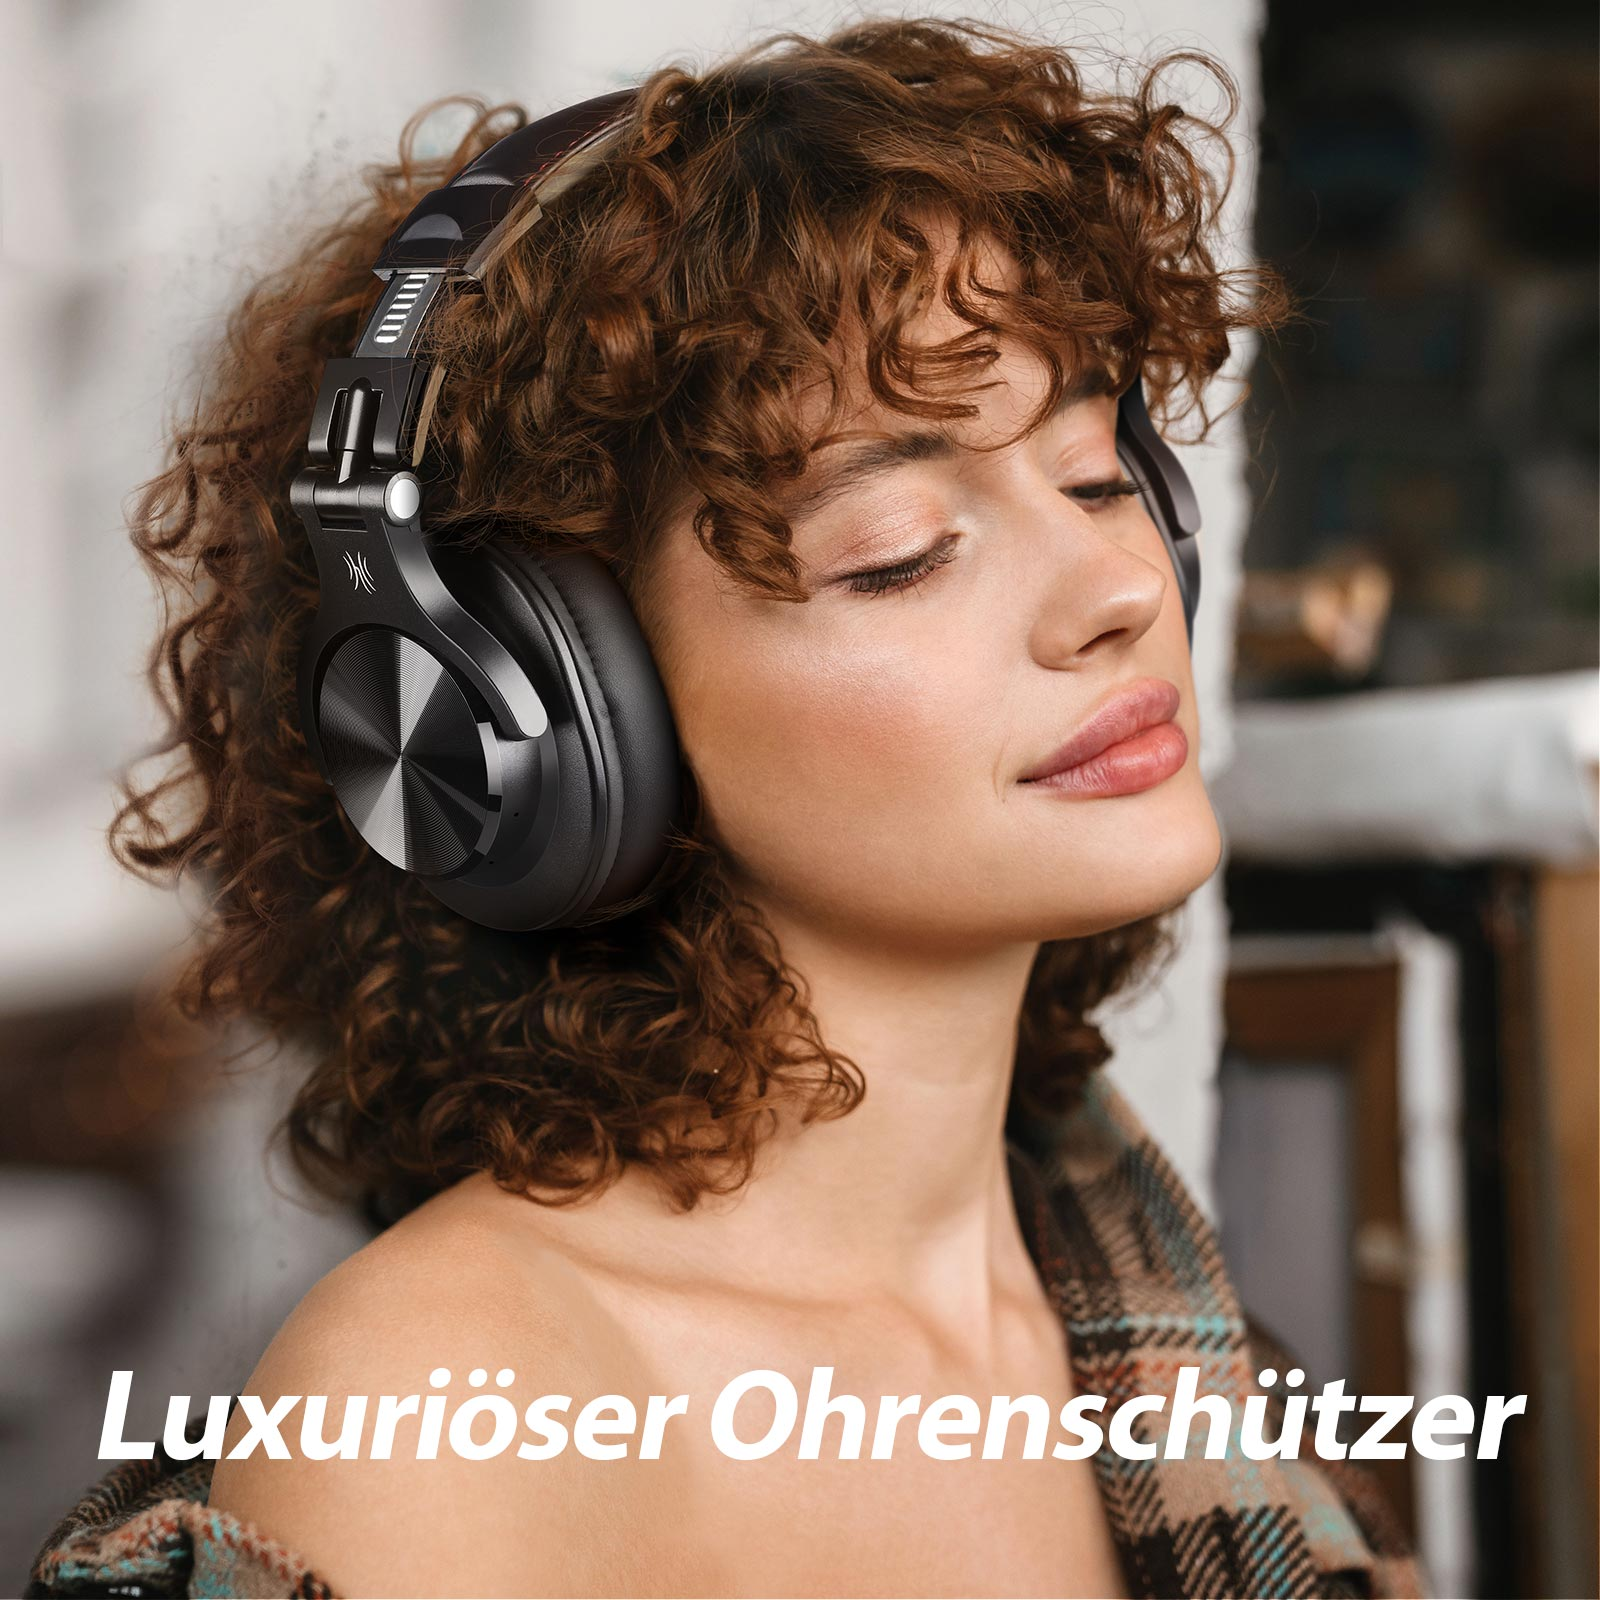 Headphones, Over-ear Bluetooth-Kopfhörer Gold ONEODIO A70